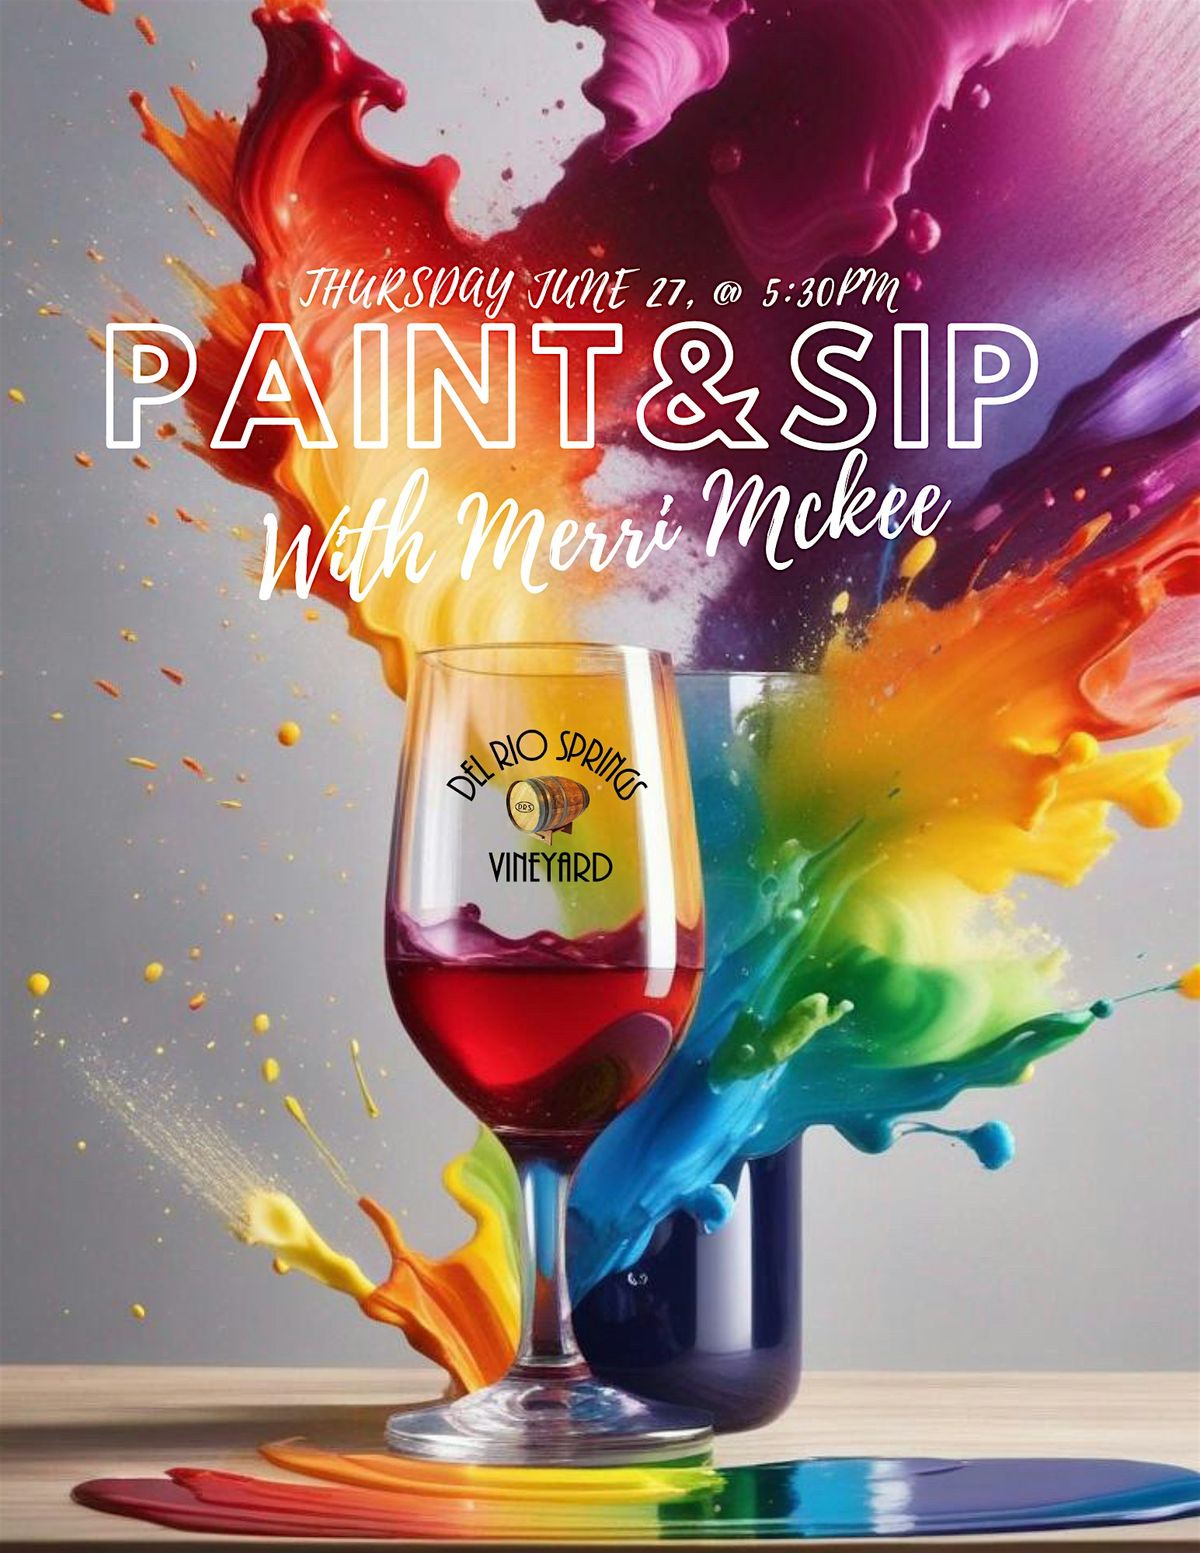 Paint & Sip with Merri Mckee